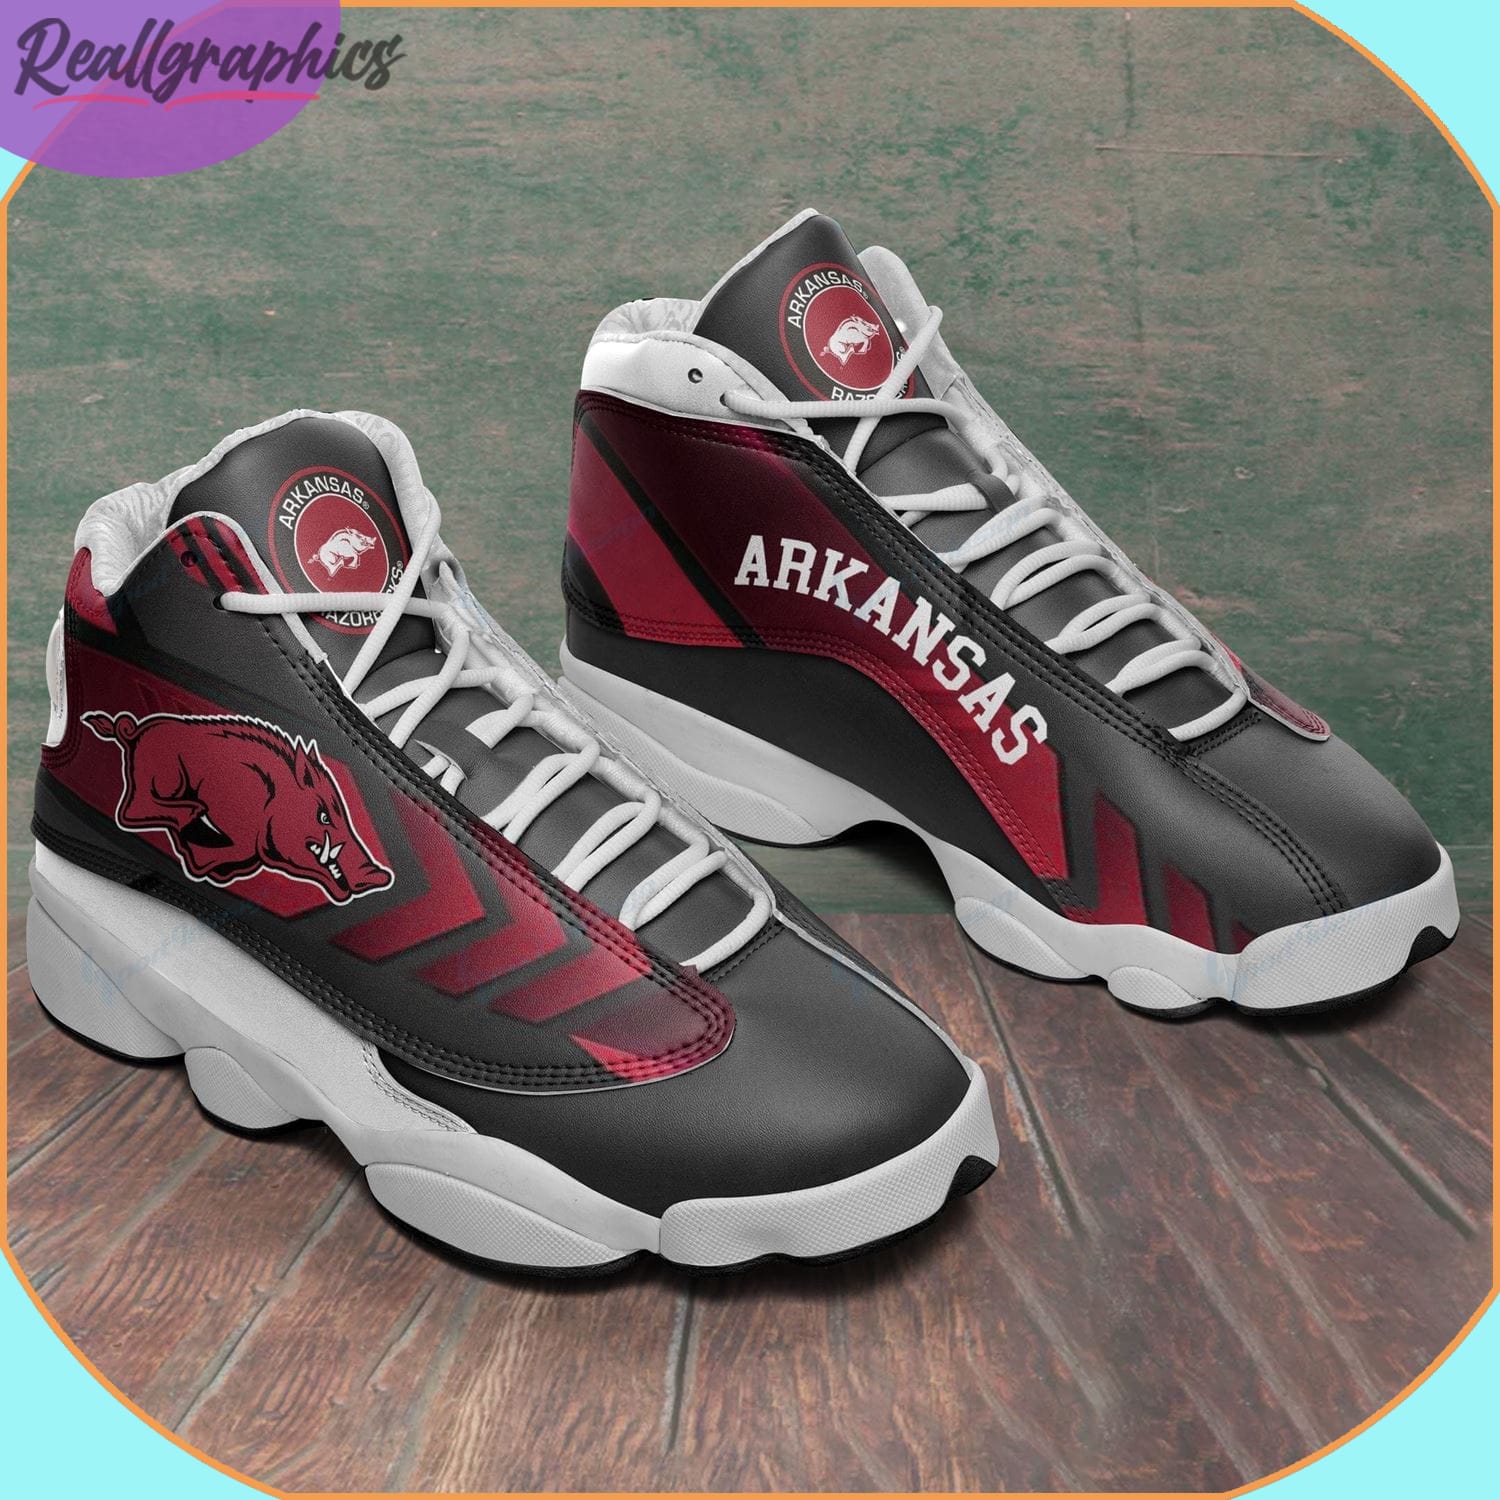 Arkansas Razorbacks Jordan 13 Sneakers